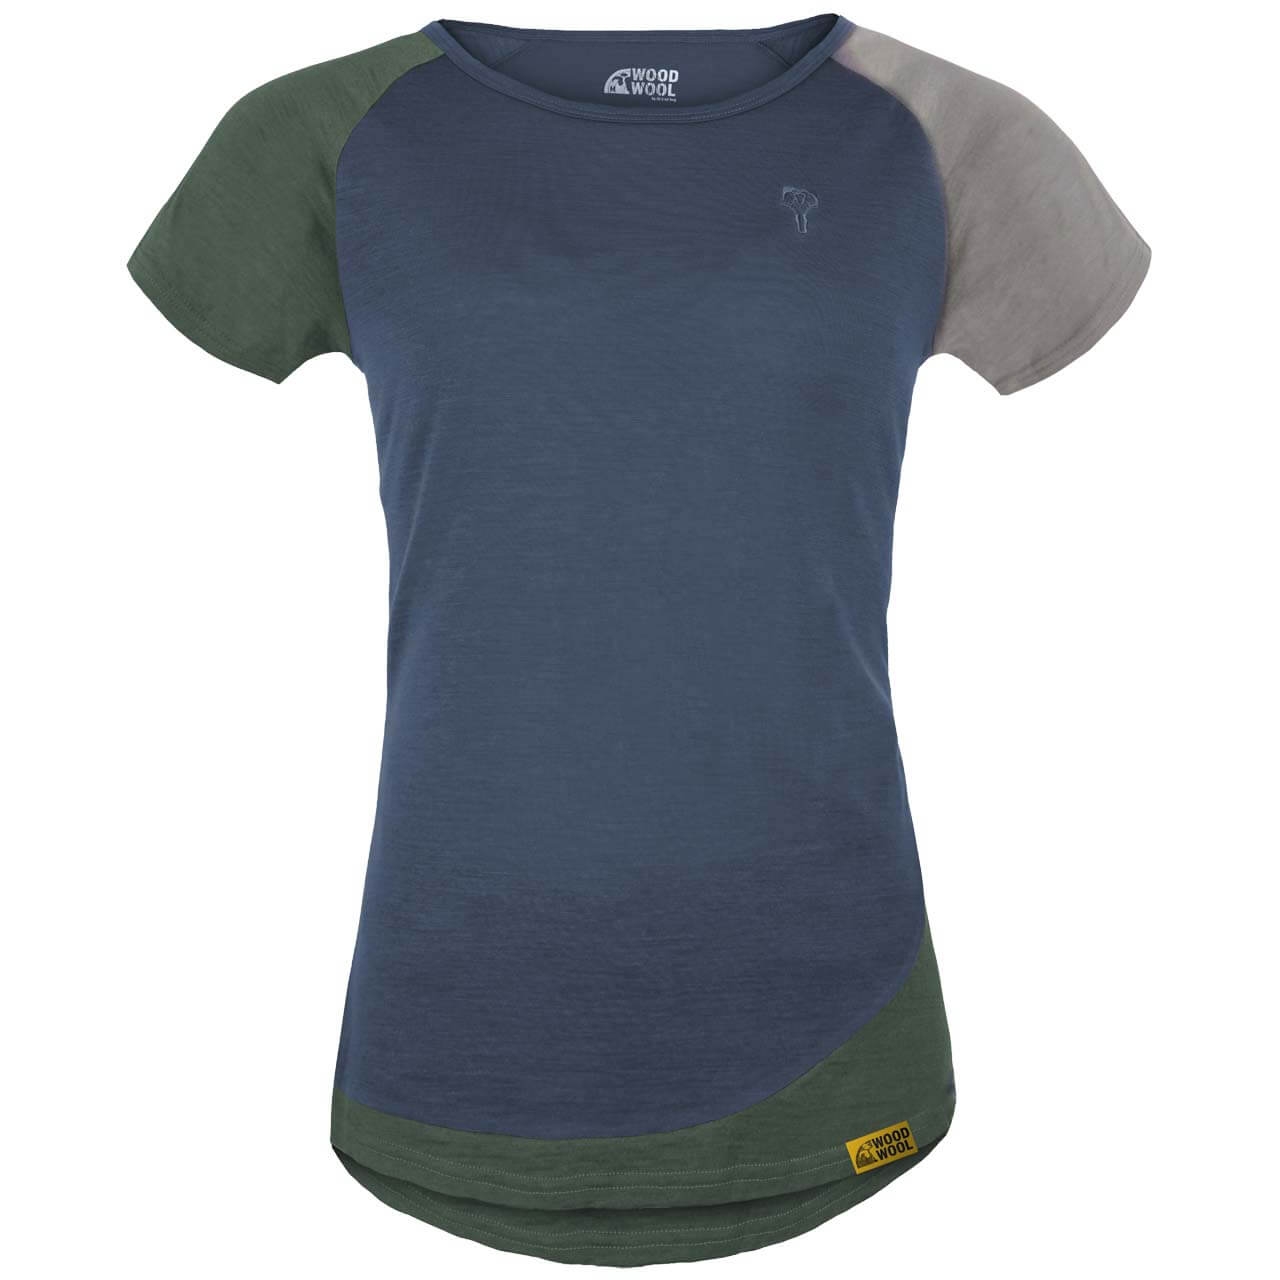 Grüezi Bag WoodWool Janeway T-Shirt - Ocean Cavern, M von Grüezi Bag}